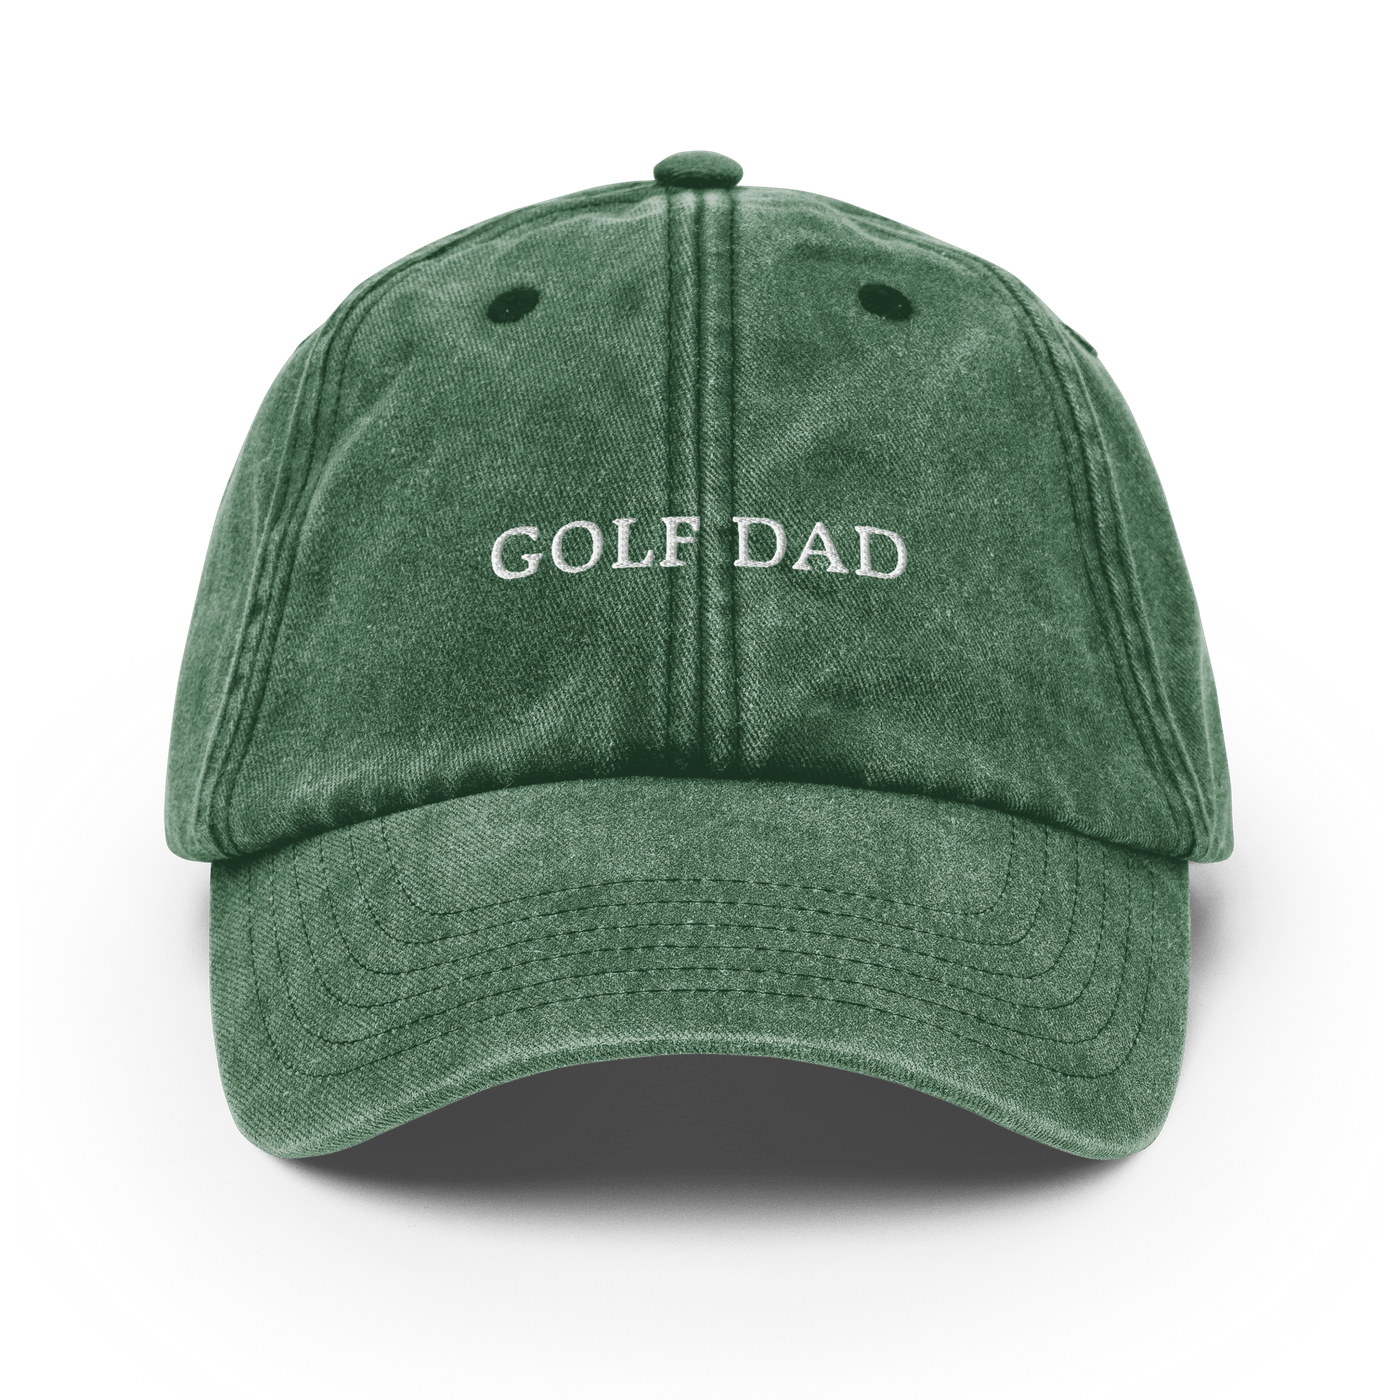 Golf Dad Vintage Hat - Vintage Bottle Green - - Just Another Cap Store